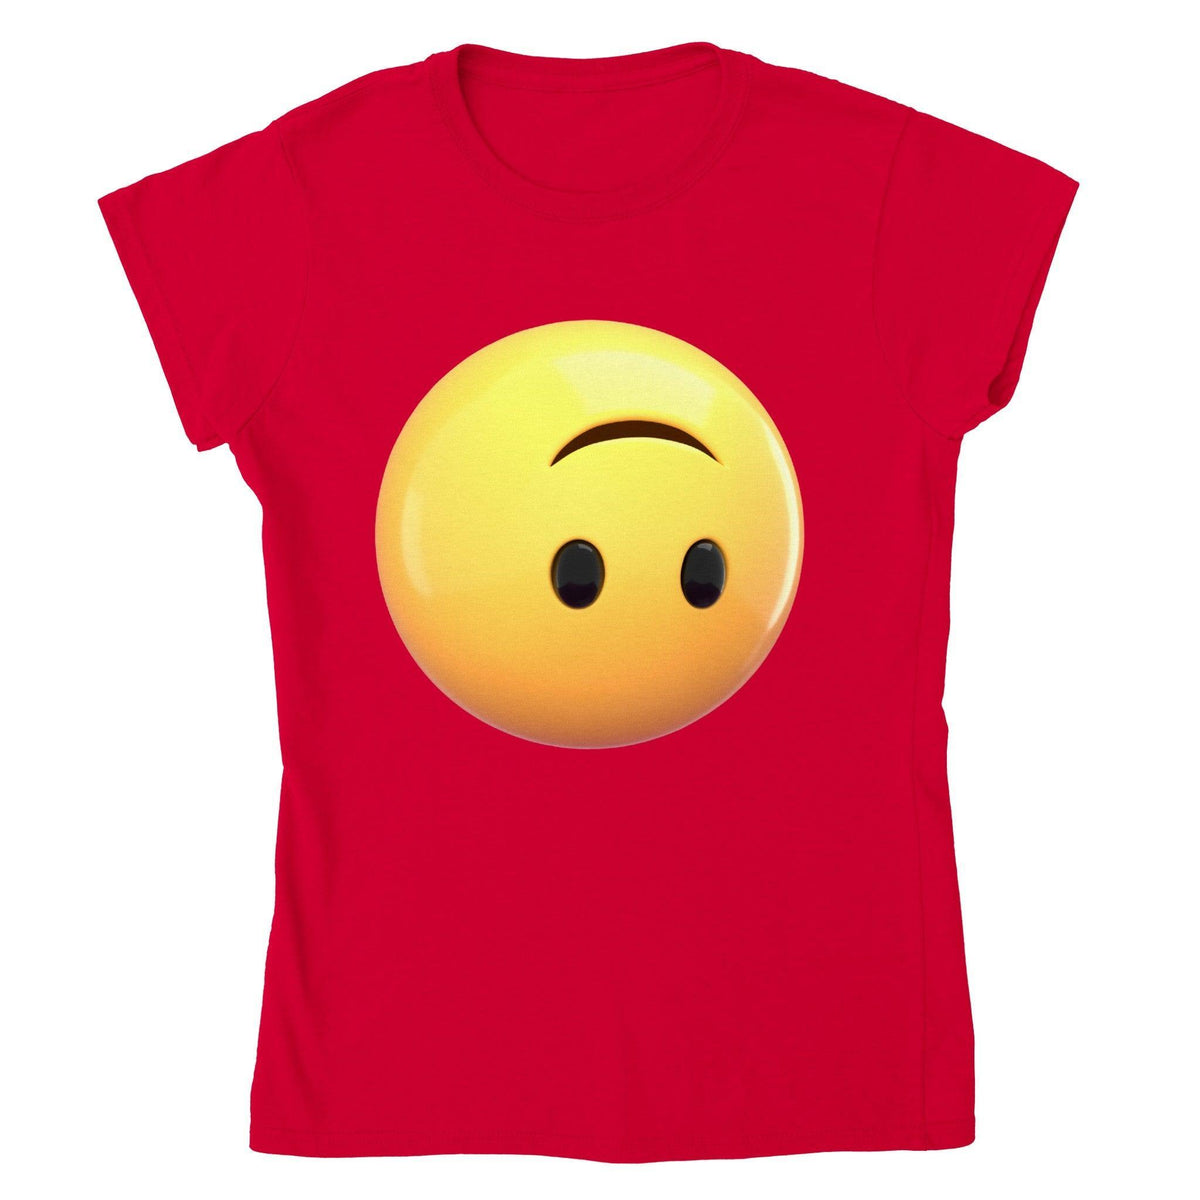 Emoji Upside Down face T-shirt - StylinArt